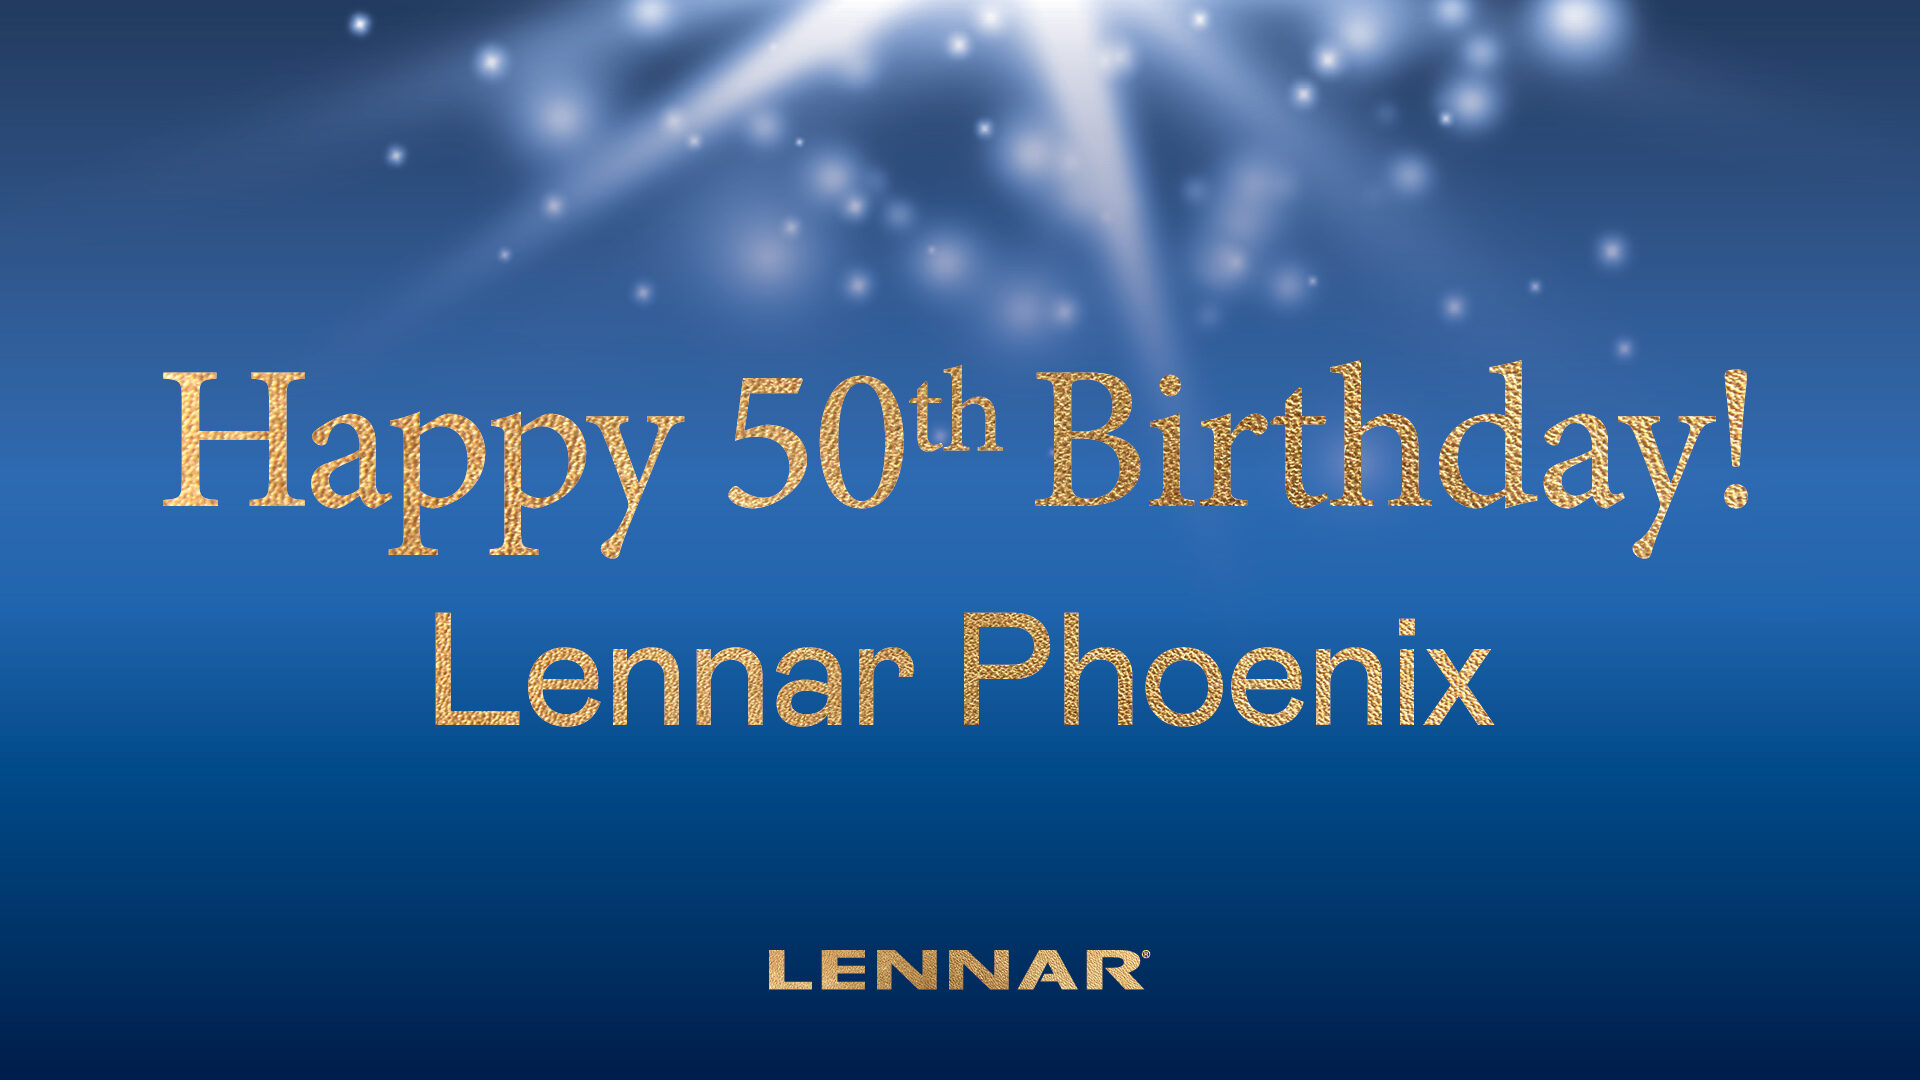 Lennar Phoenix 50 Years